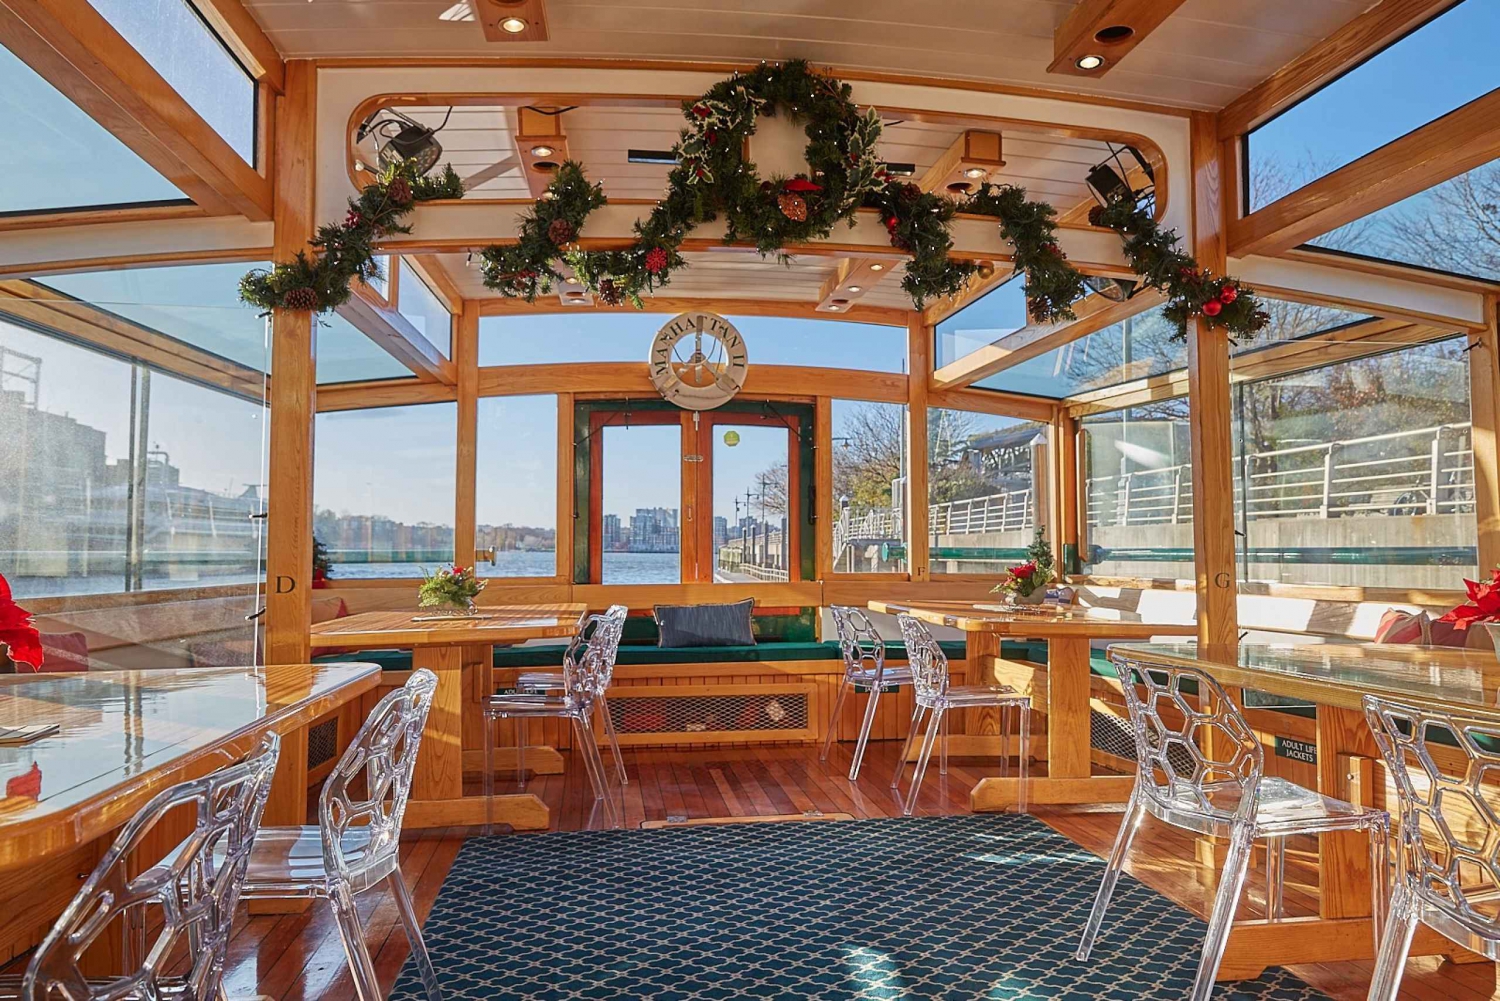 NYC: Holiday Yacht Cruise with Jazz, Cocoa & Carols